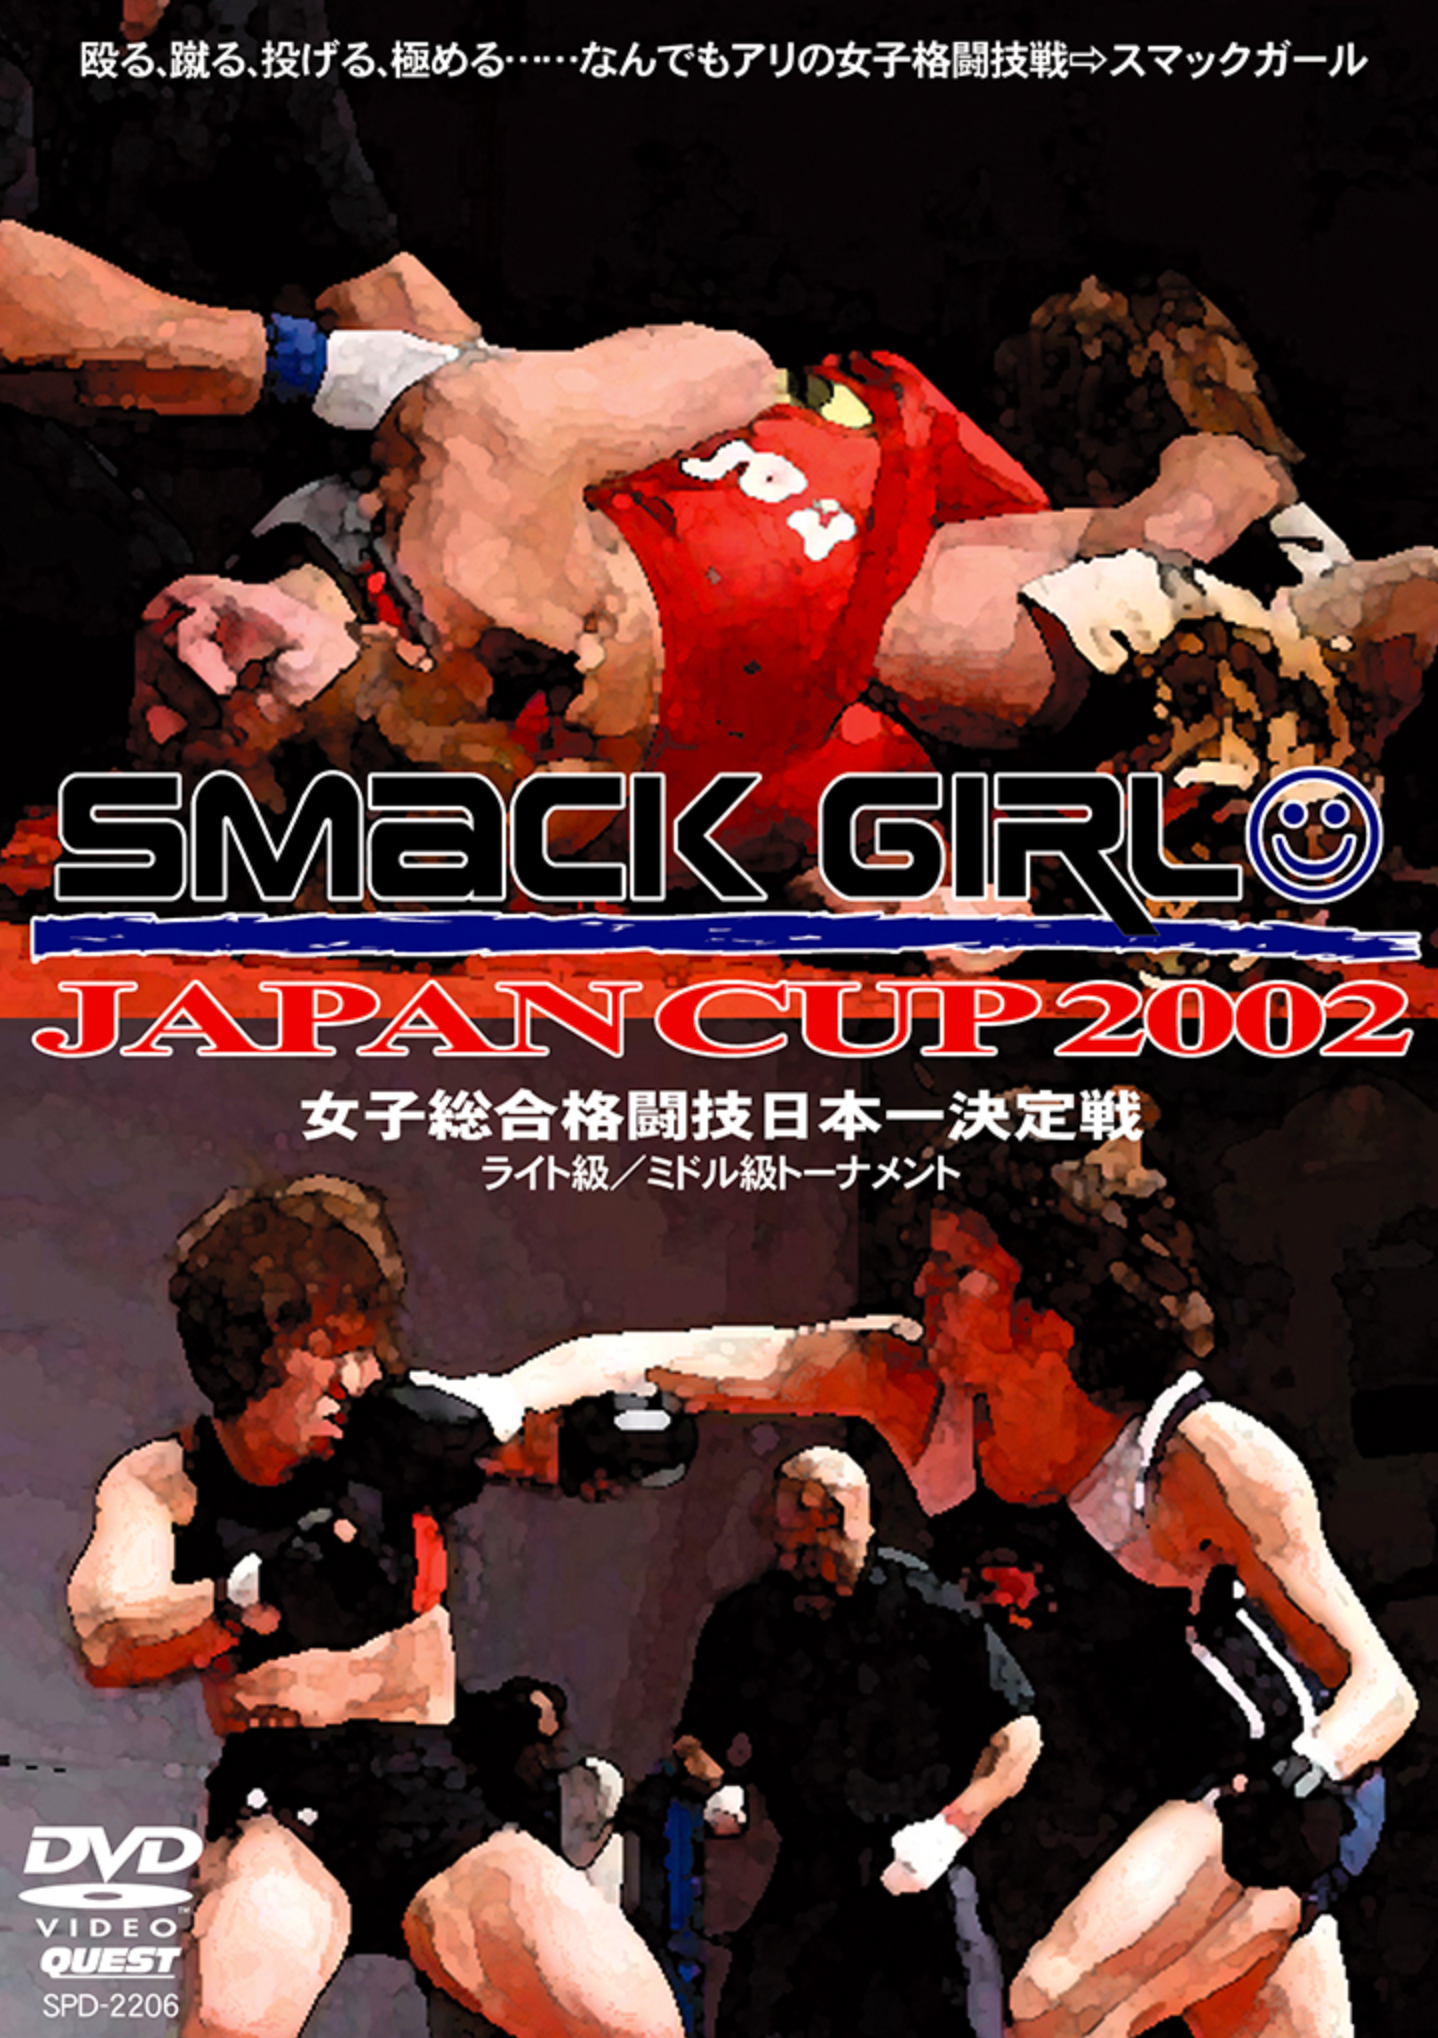 Smack Girl Japan Cup 2002 DVD - Budovideos Inc